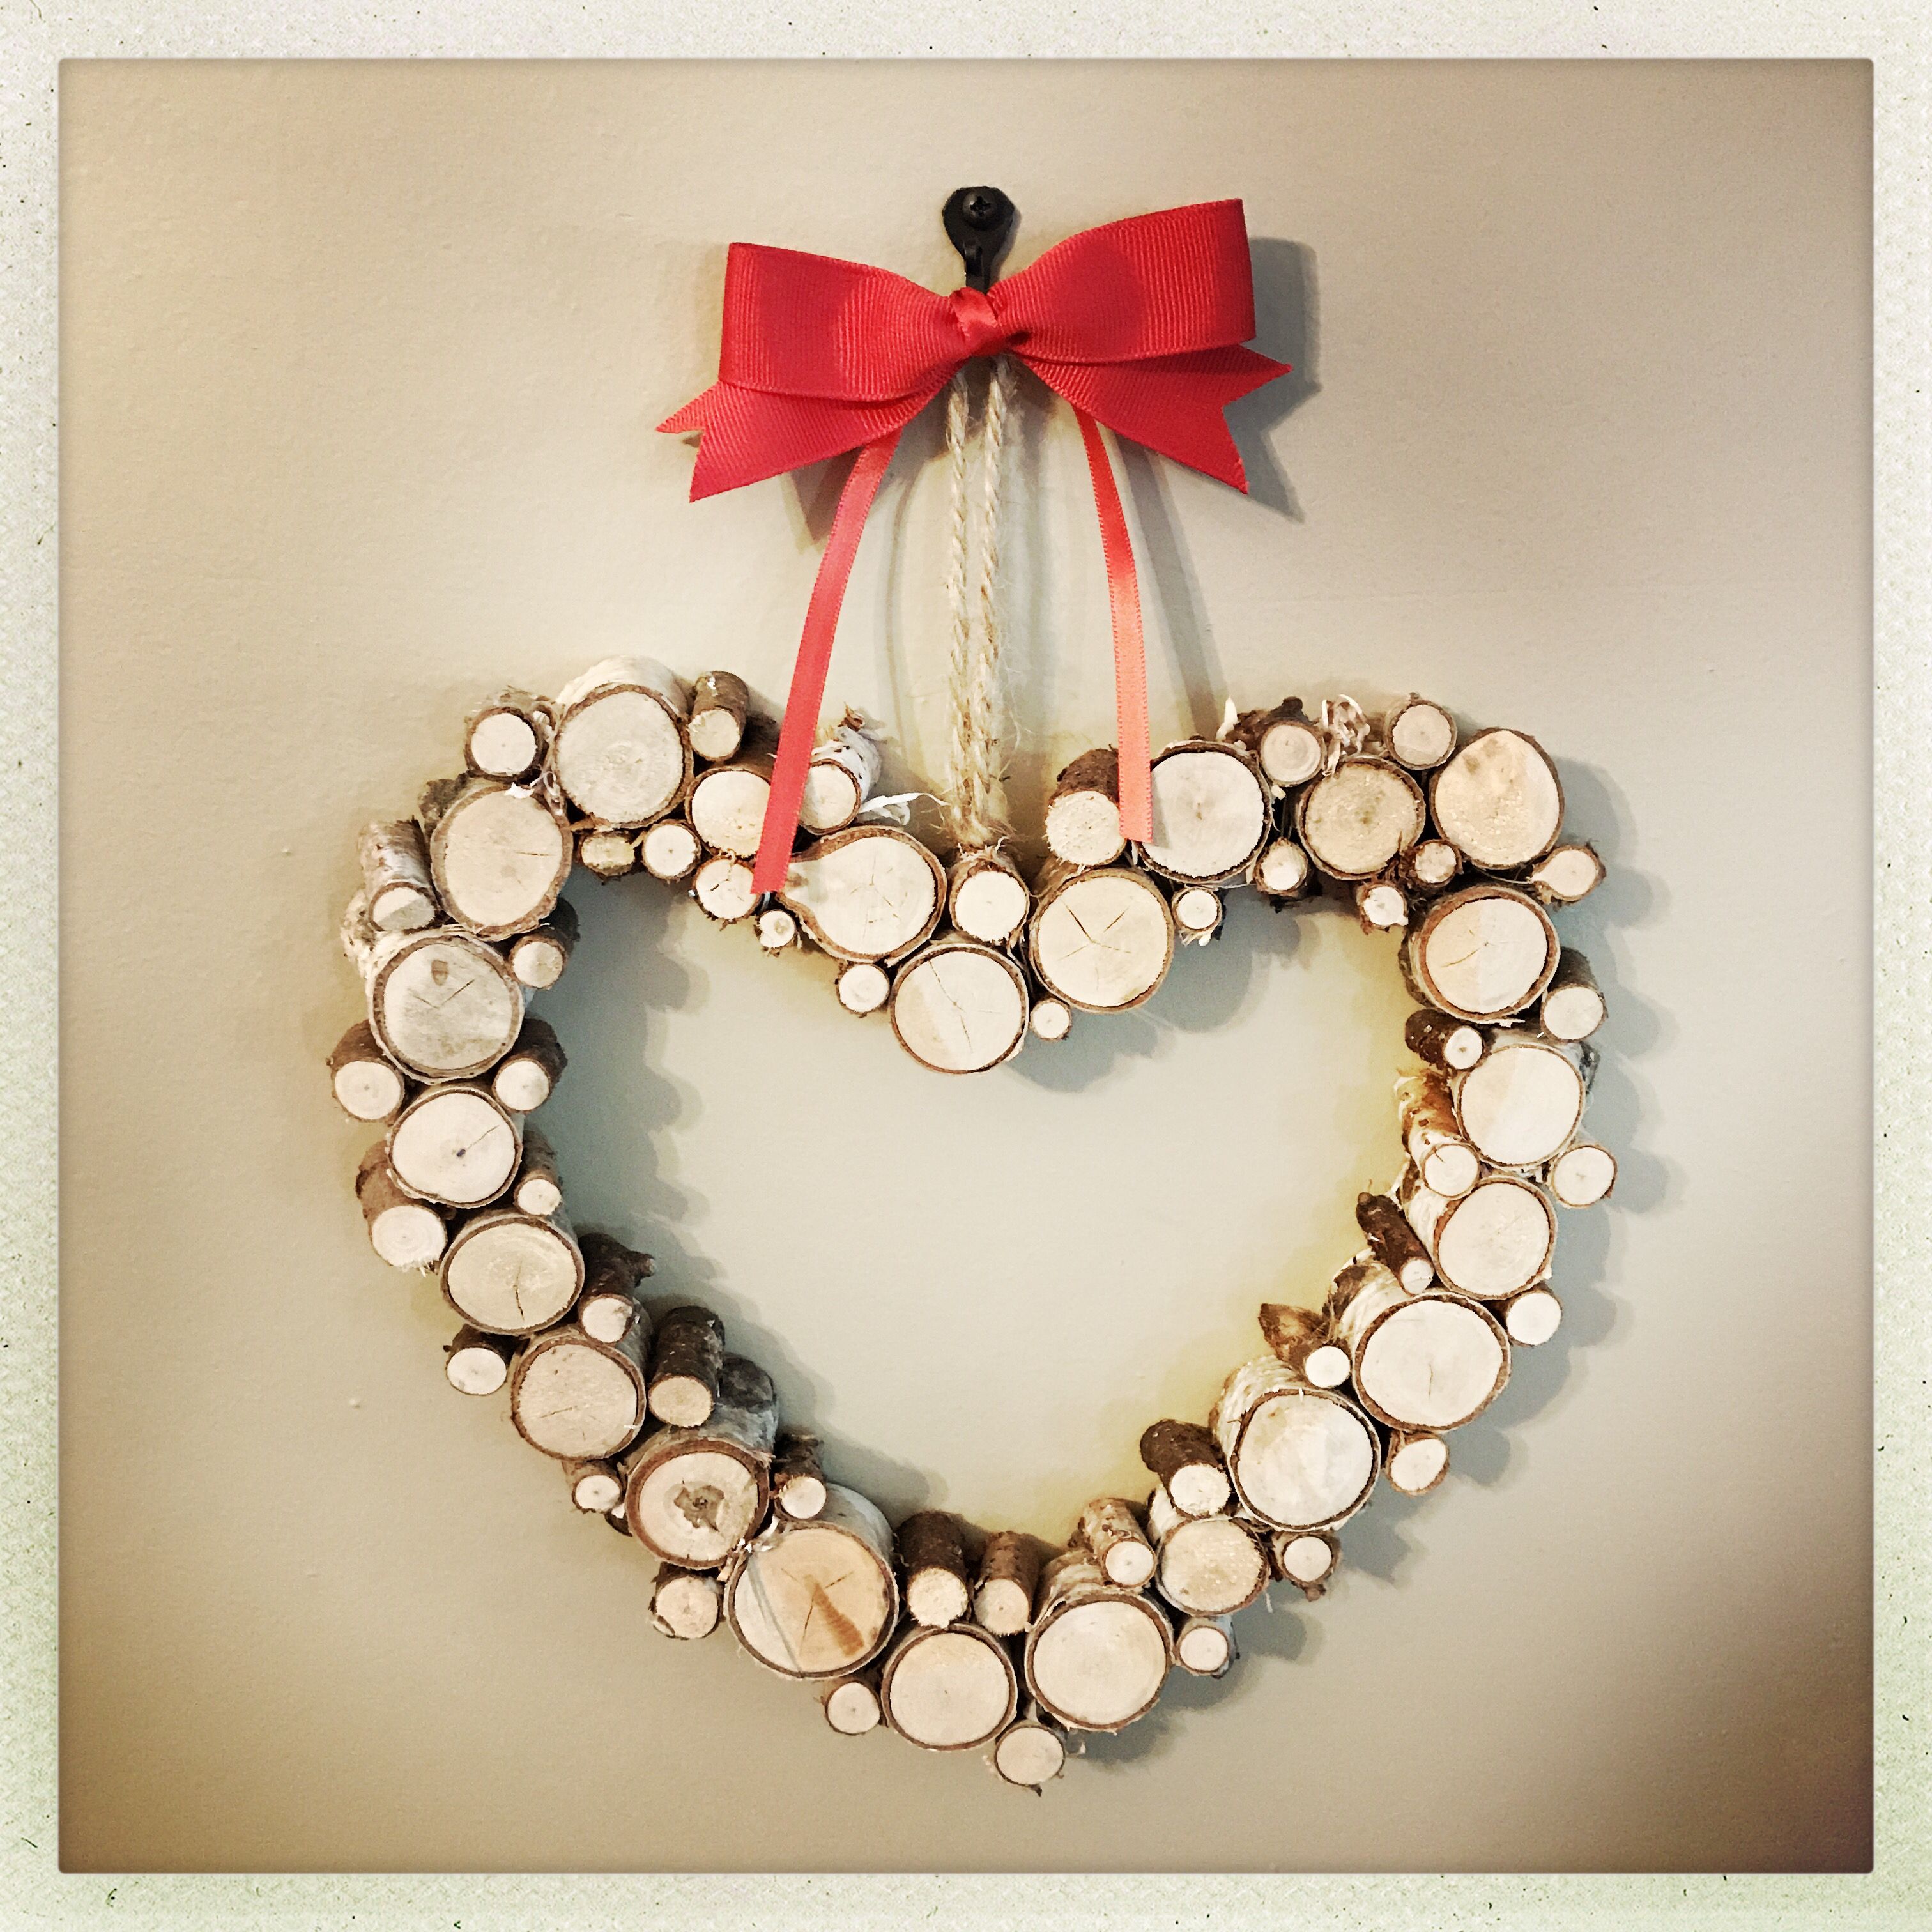 Sweetheart Valentine's Day Wreath 